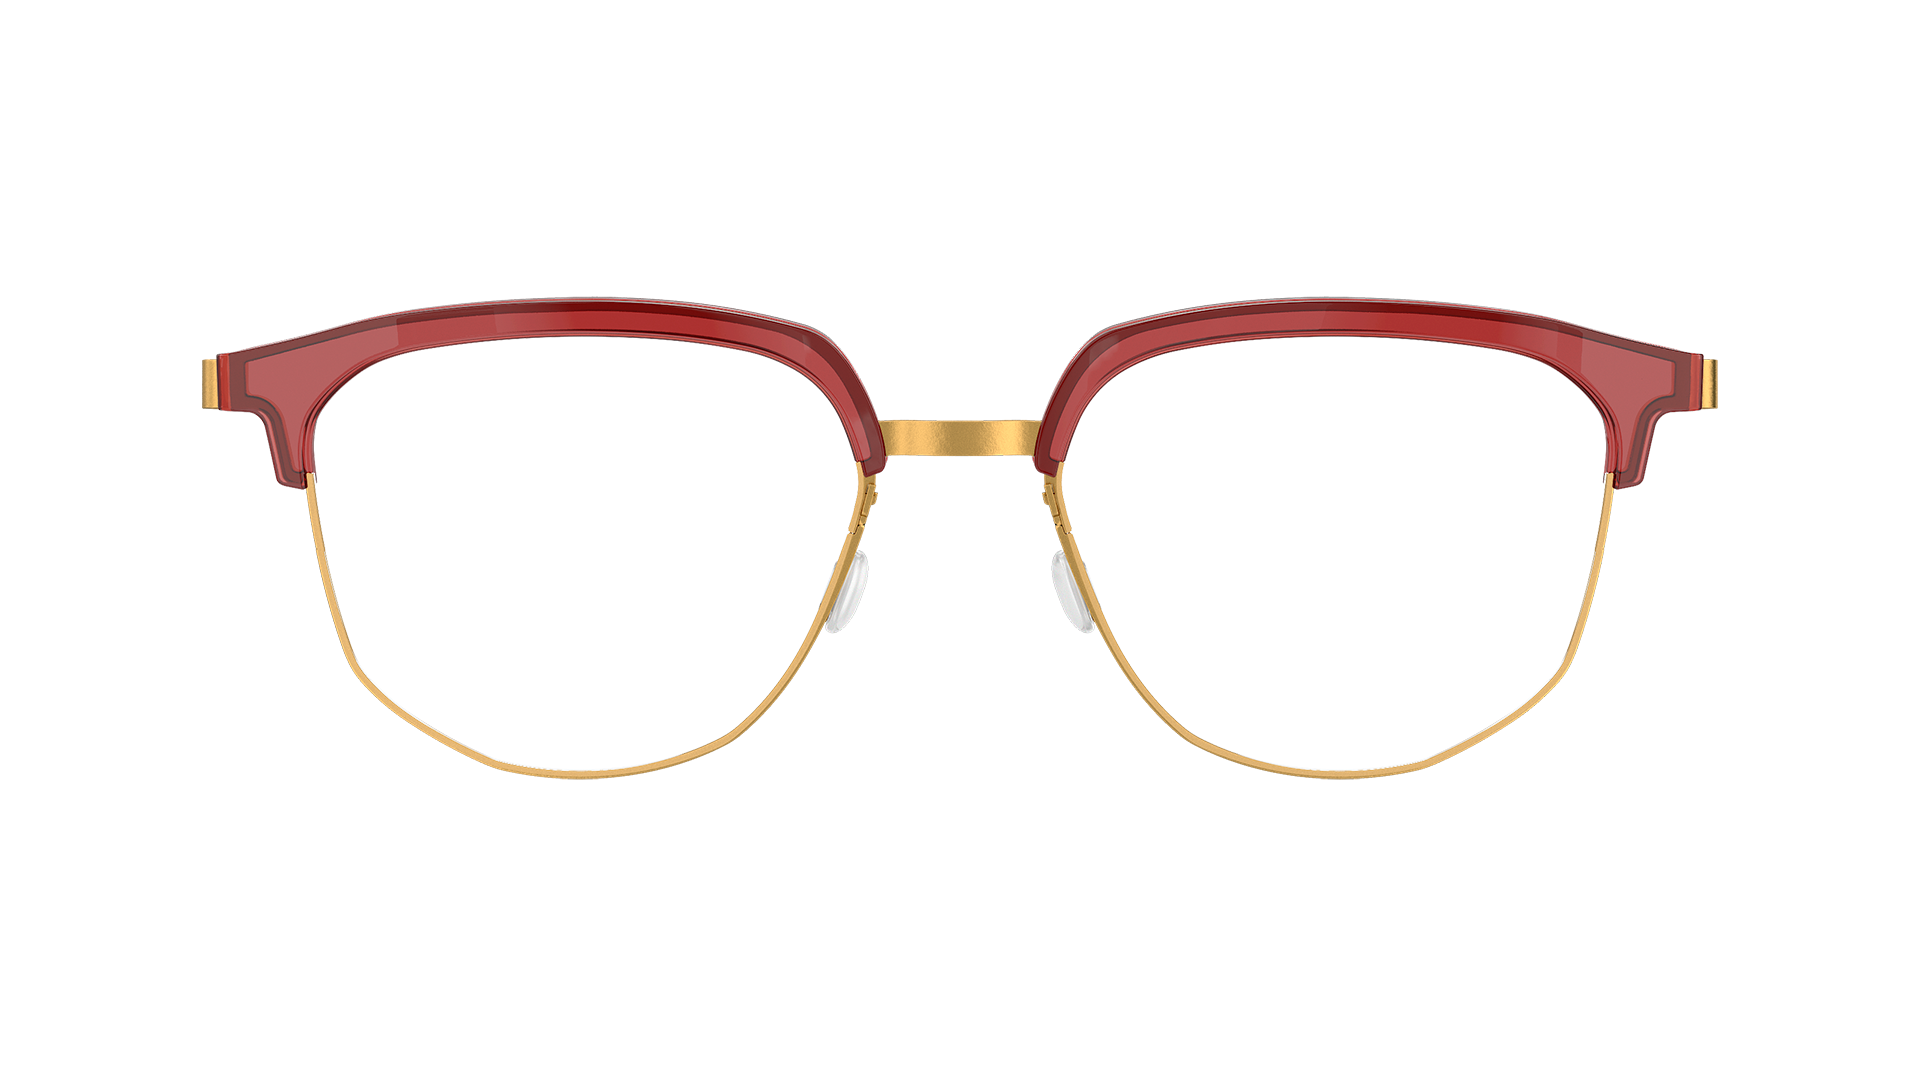 LINDBERG strip, Modell 9850 GT, goldene Titanbrille mit halbtransparentem Oberrand aus Acetat in Rot